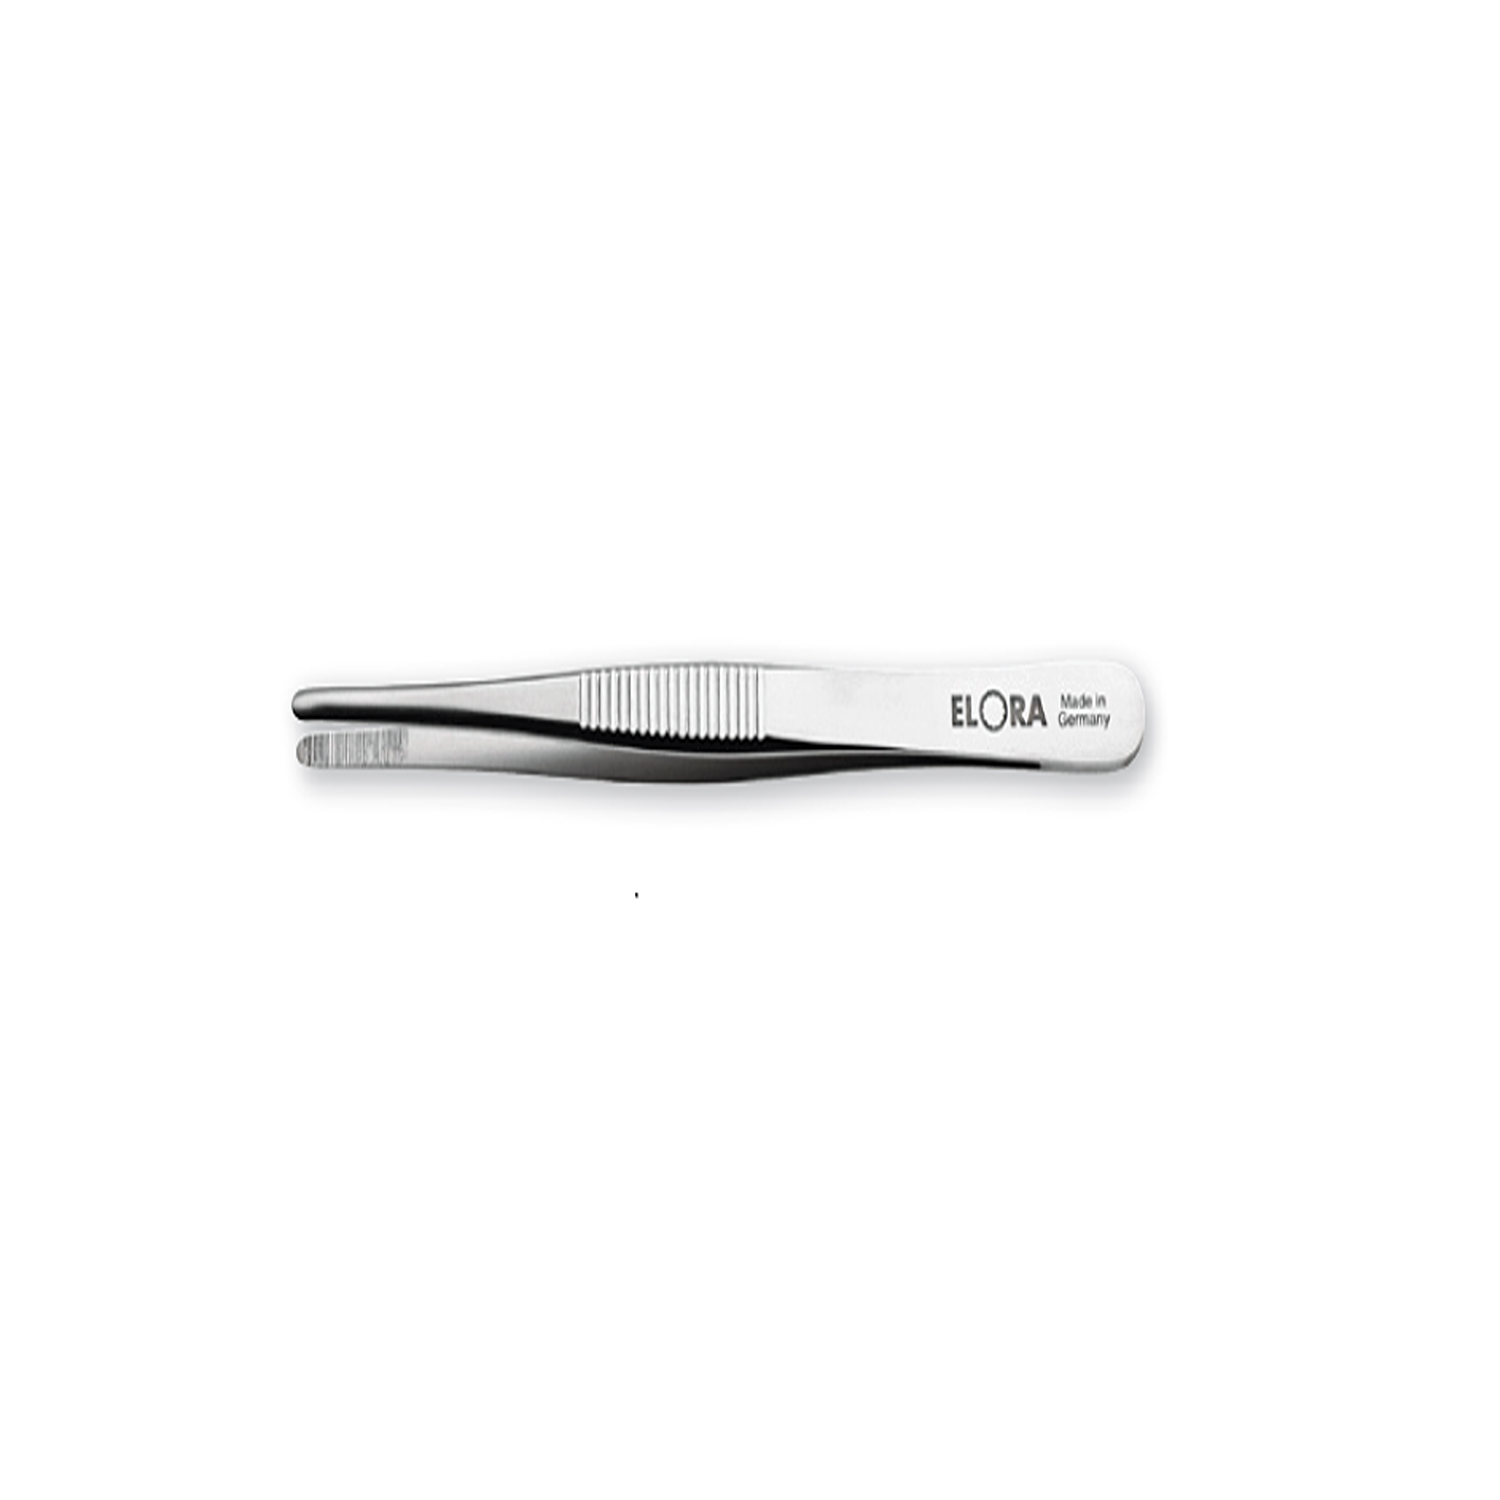 ELORA 5140-ST Universal Tweezer (ELORA Tools) - Premium Universal Tweezer from ELORA - Shop now at Yew Aik.